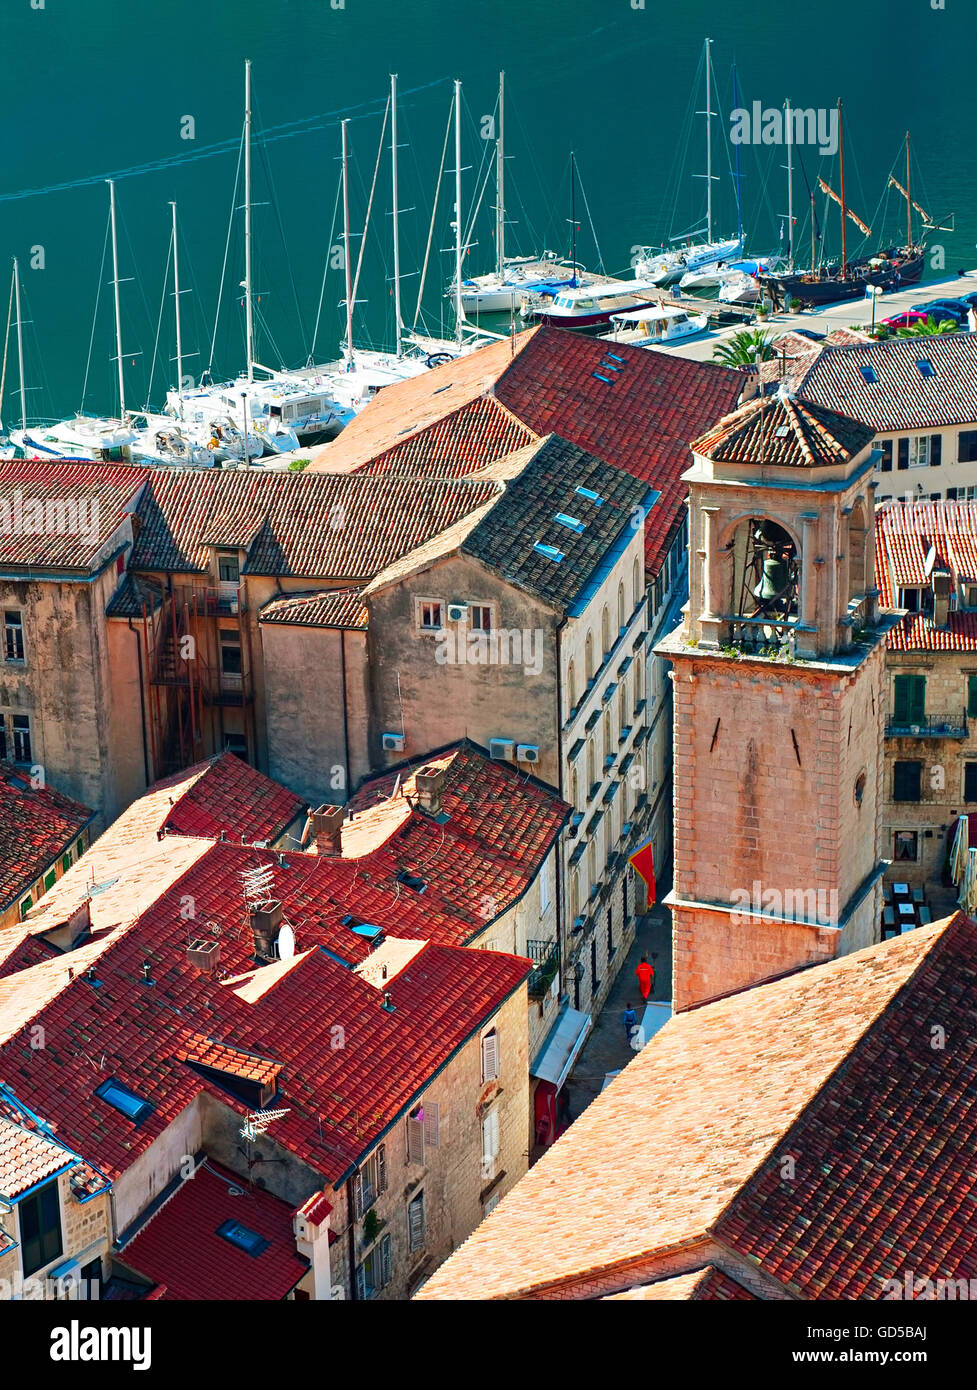 Luftbild der Altstadt von Kotor, Montenegro - UNESCO World Heritage Anblick Stockfoto